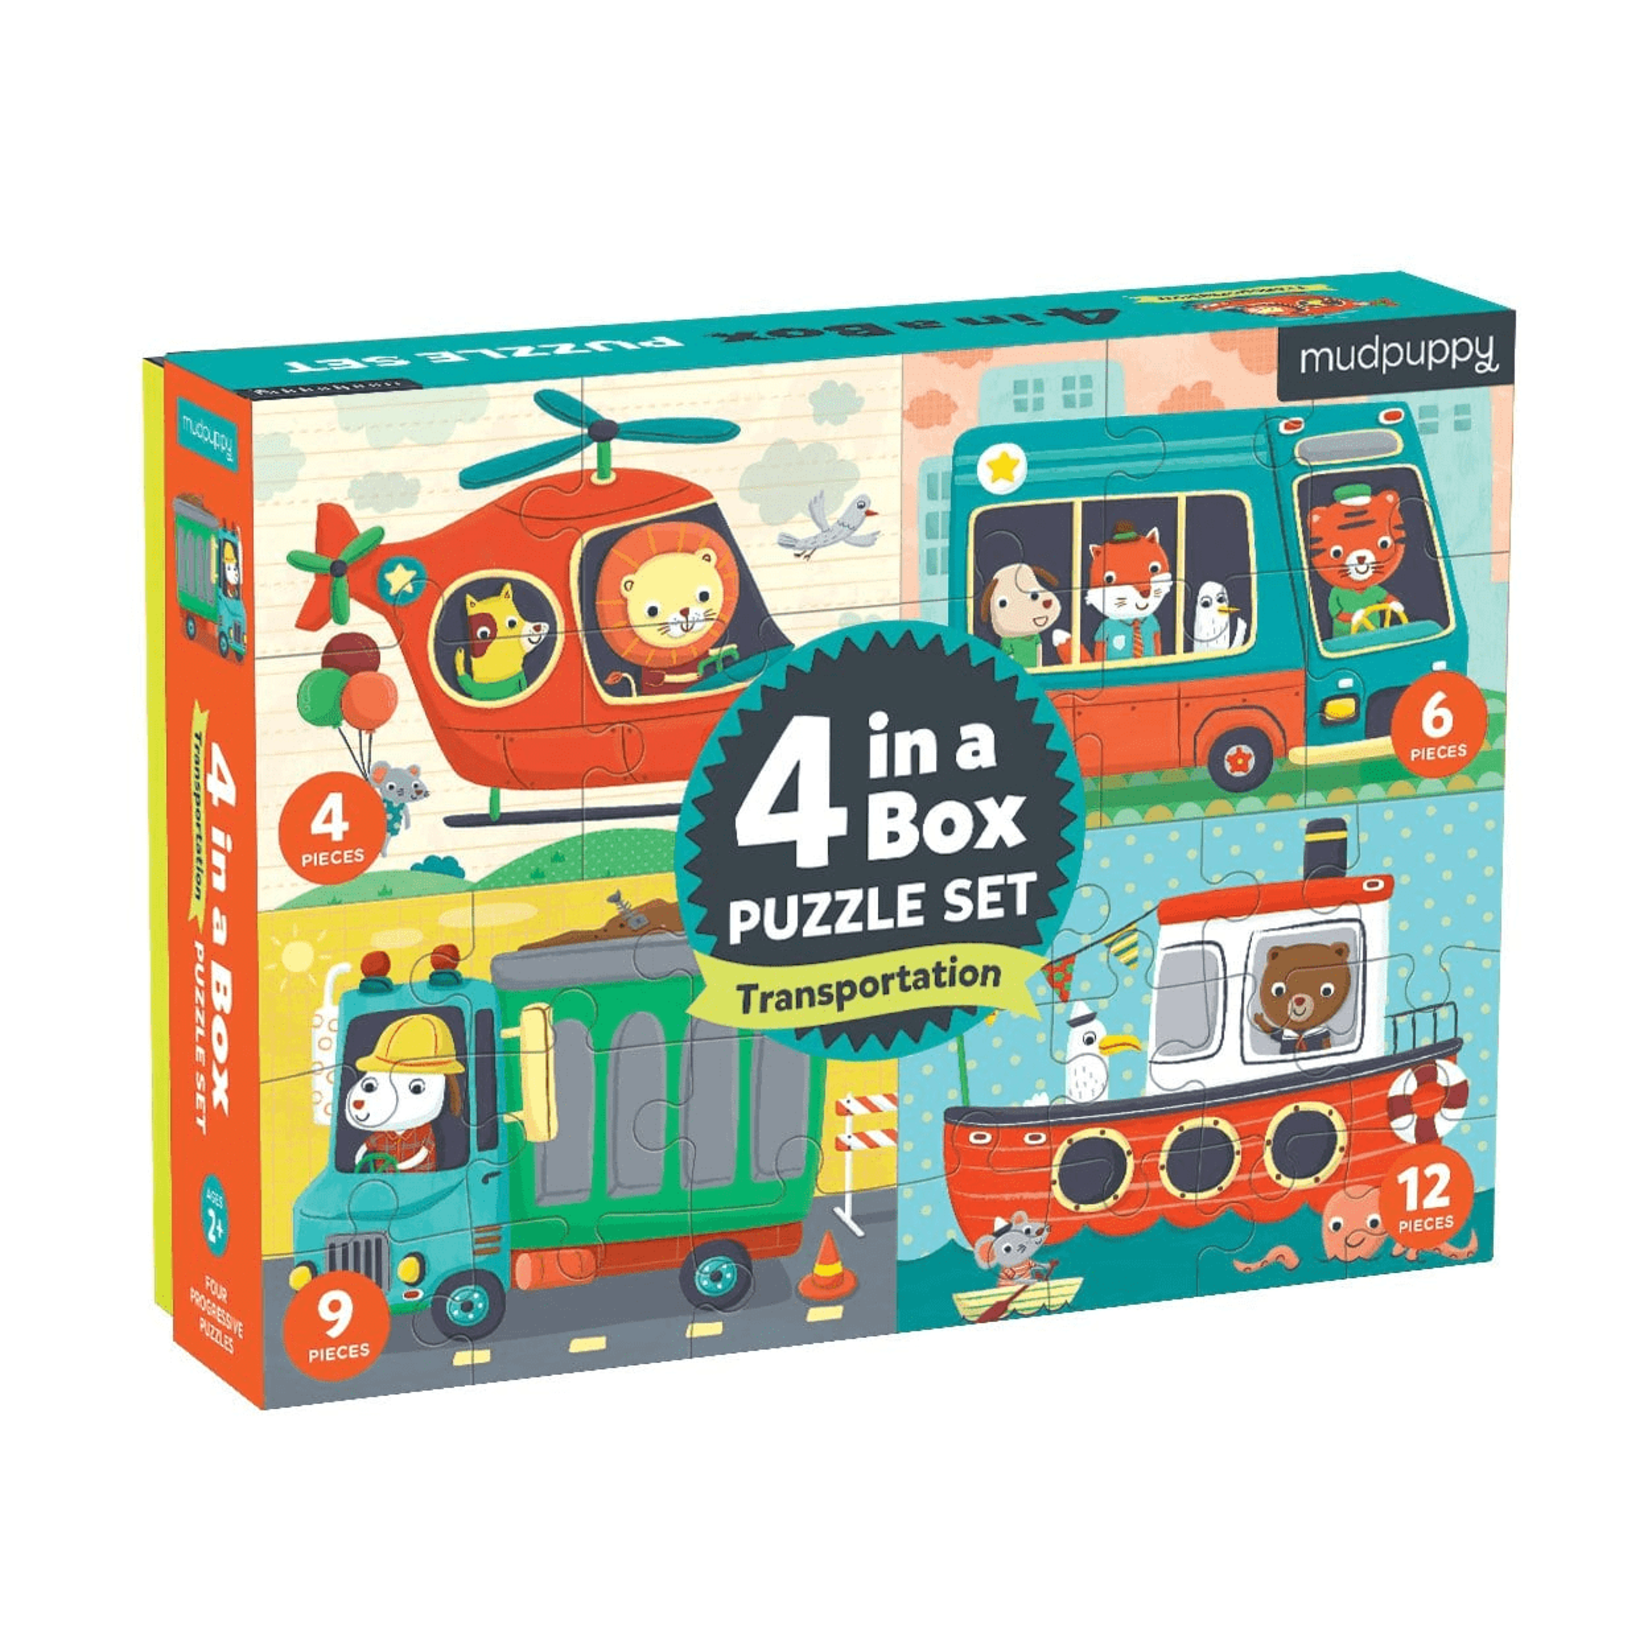 Mudpuppy 4-in-a-Box Puzzle Set - Transportation